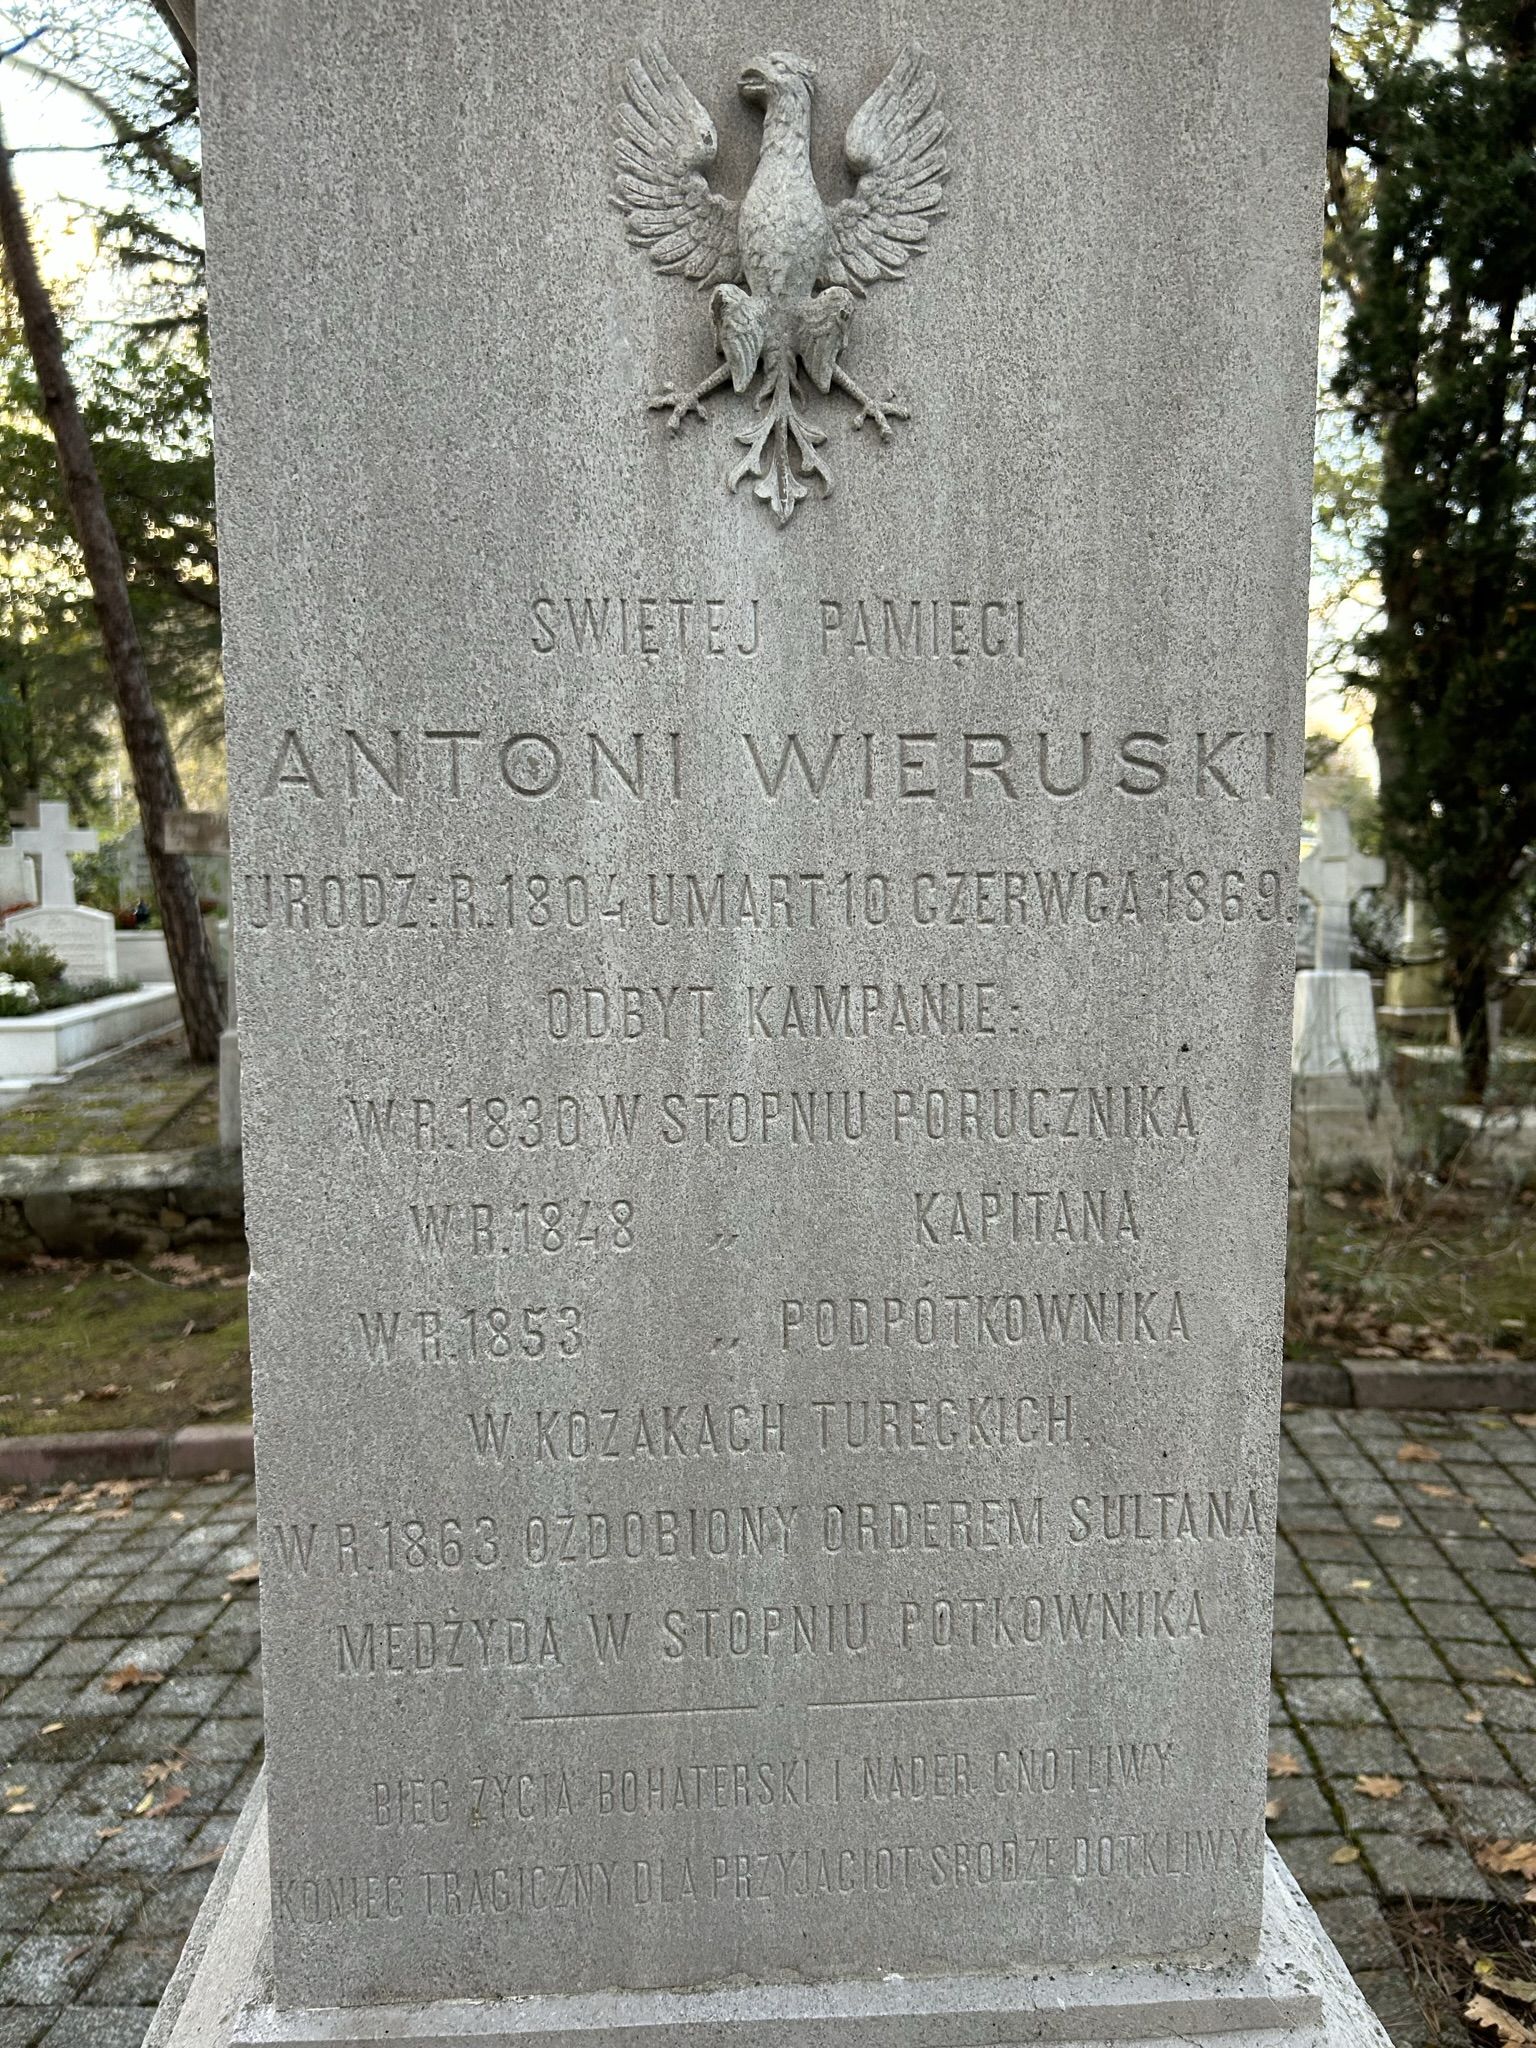 Inscription from the gravestone of Antoni Wieruski, Catholic cemetery in Adampol